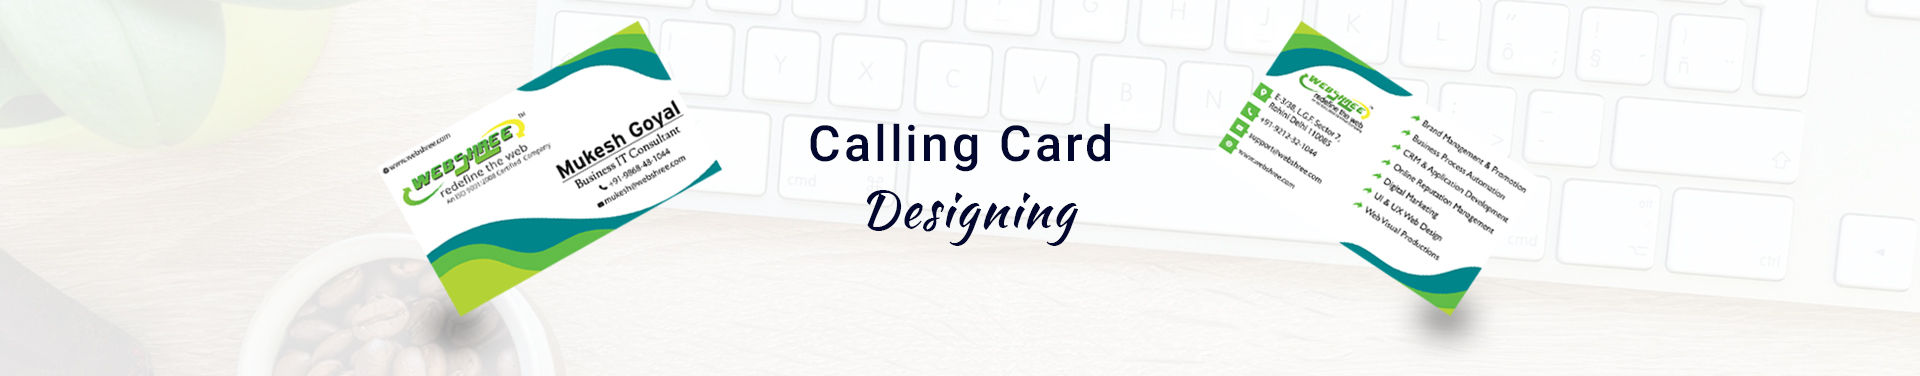 Calling Card Designing